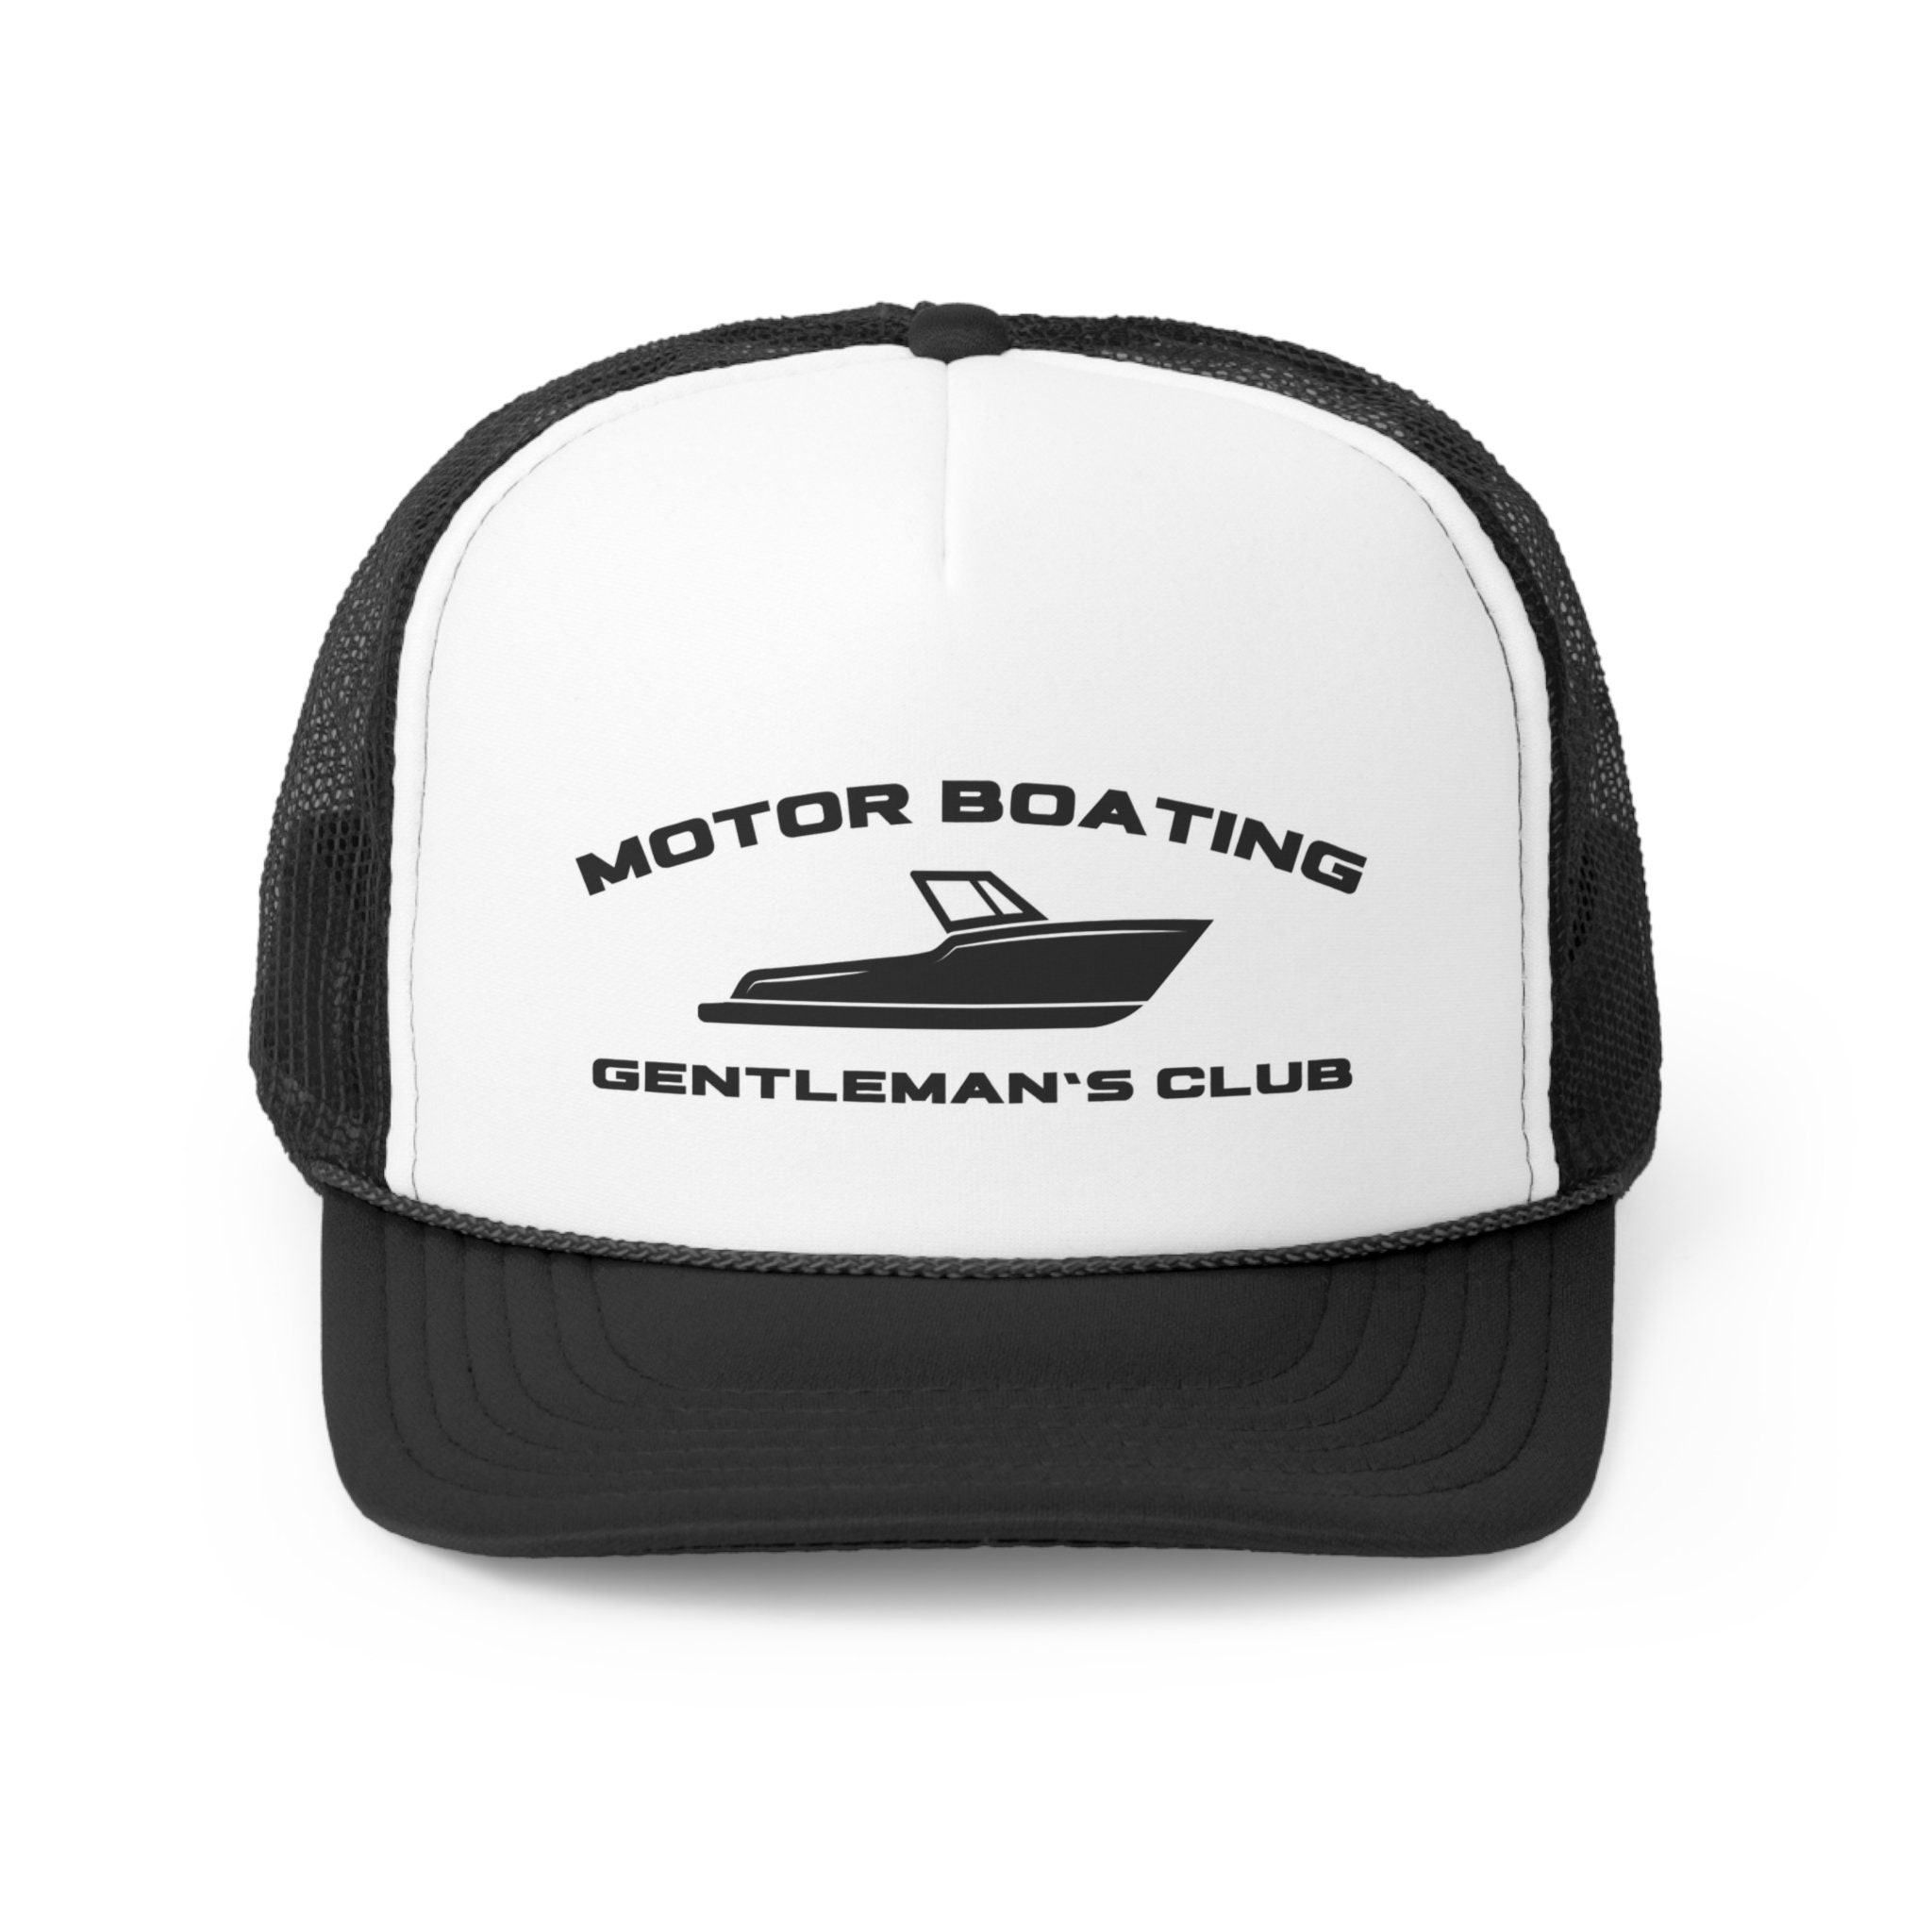 Buy Boat Hat Online In India -  India